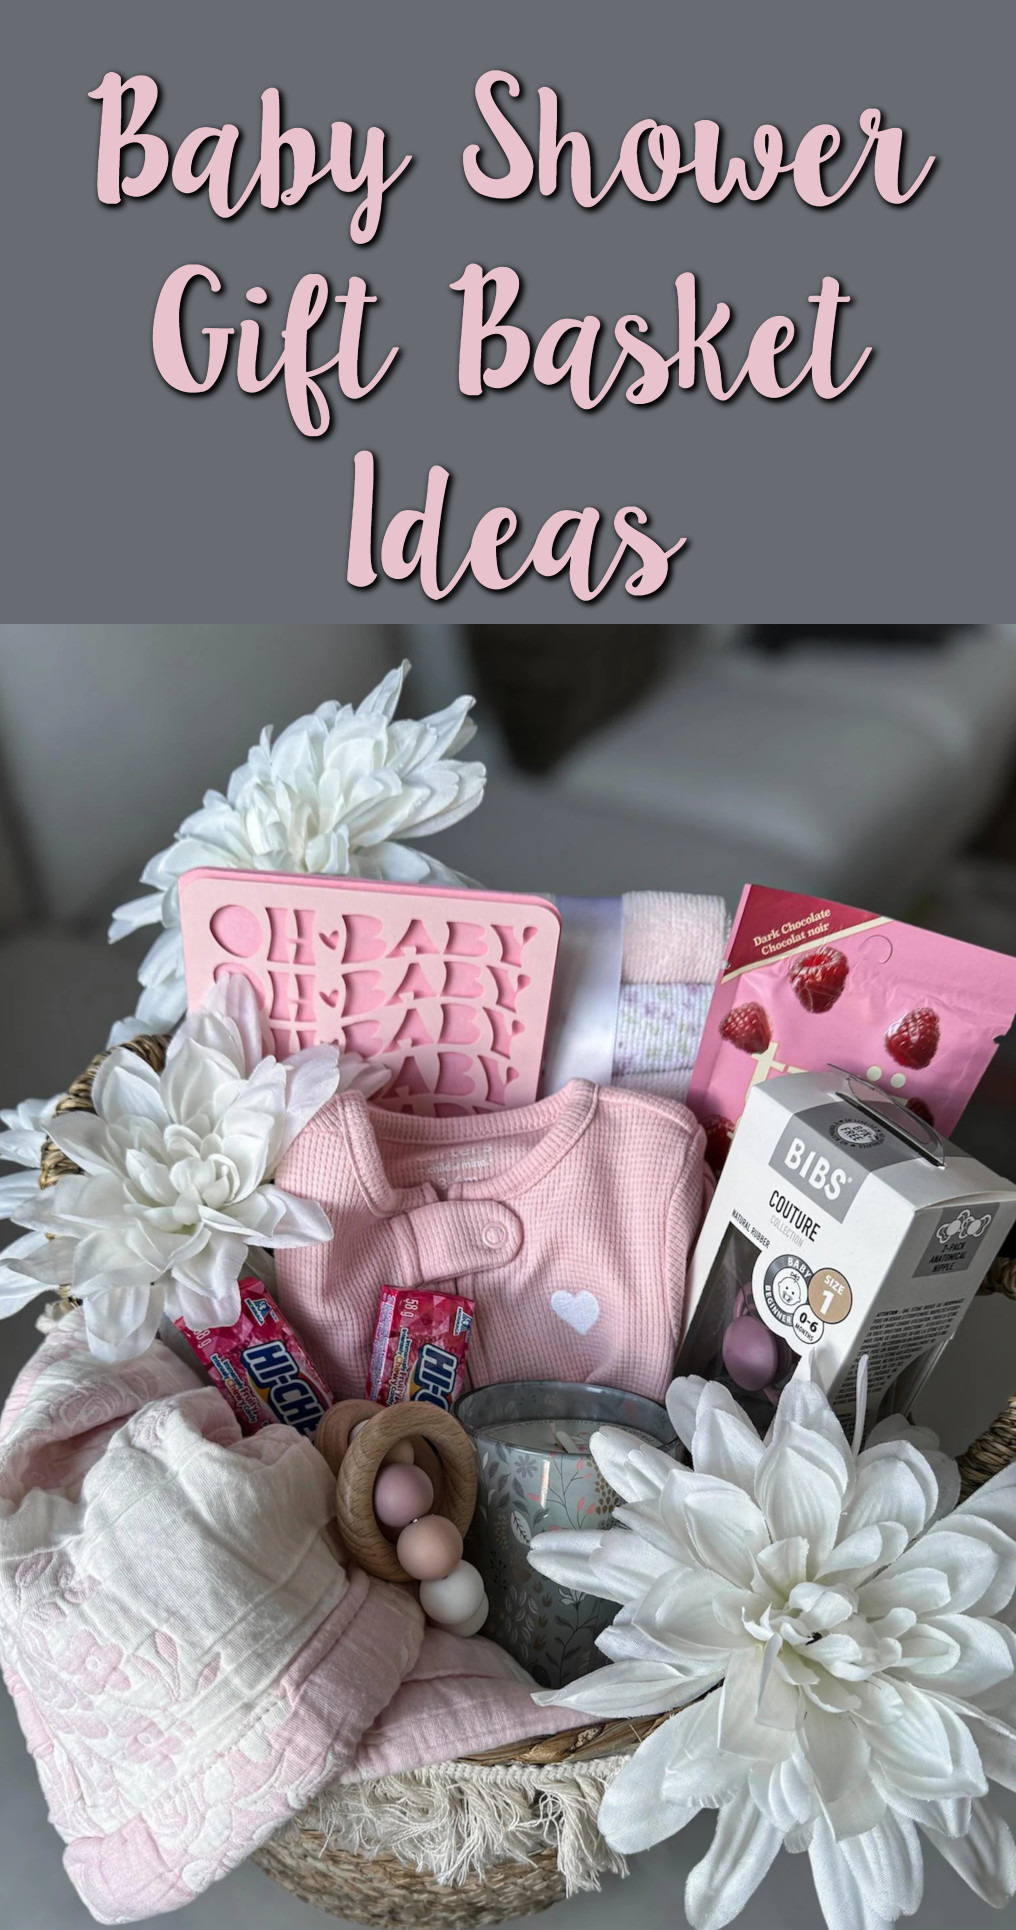 Baby shower gift basket idea